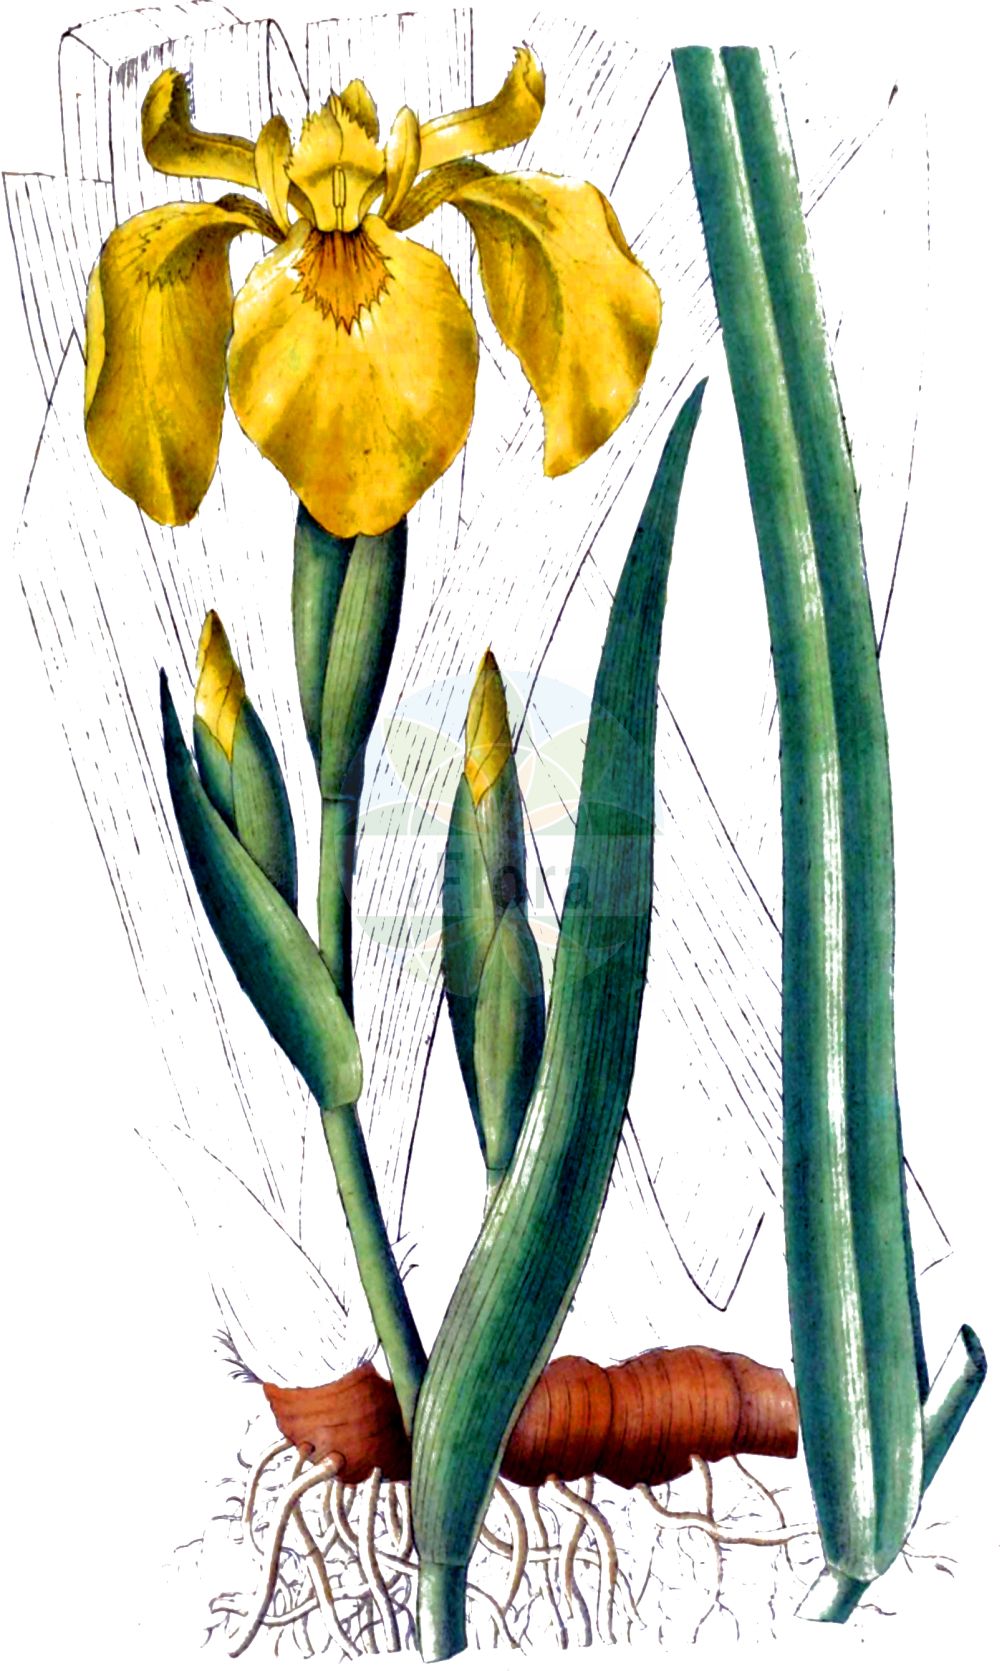 Historische Abbildung von Iris pseudacorus (Sumpf-Schwertlilie - Yellow Iris). Das Bild zeigt Blatt, Bluete, Frucht und Same. ---- Historical Drawing of Iris pseudacorus (Sumpf-Schwertlilie - Yellow Iris). The image is showing leaf, flower, fruit and seed.(Iris pseudacorus,Sumpf-Schwertlilie,Yellow Iris,Acorus adulterinus,Colchicum falcifolium,Iris acoriformis,Iris acoroides,Iris bastardii,Iris curtopetala,Iris flava,Iris lutea,Iris pallidior,Iris paludosa,Iris palustris,Iris pseudacorus,Iris sativa,Limnirion pseudacorus,Limniris pseudacorus,Moraea candolleana,Pseudo-iris palustris,Vieusseuxia iridioides,Xiphion acoroides,Xiphion pseudacorus,Xyridion acoroideum,Xyridion pseudacorus,Sumpf-Schwertlilie,Gelbe Schwertlilie,Wasser-Schwertlilie,Yellow Iris,Jacob's Wort,Paleyellow Iris,Rocky Mountain Iris,Water Flag,Yellow Flag,Yellow-flag Iris,Iris,Schwertlilie,Iris,Iridaceae,Schwertliliengewächse,Iris family,Blatt,Bluete,Frucht,Same,leaf,flower,fruit,seed,Dietrich (1833-1844))